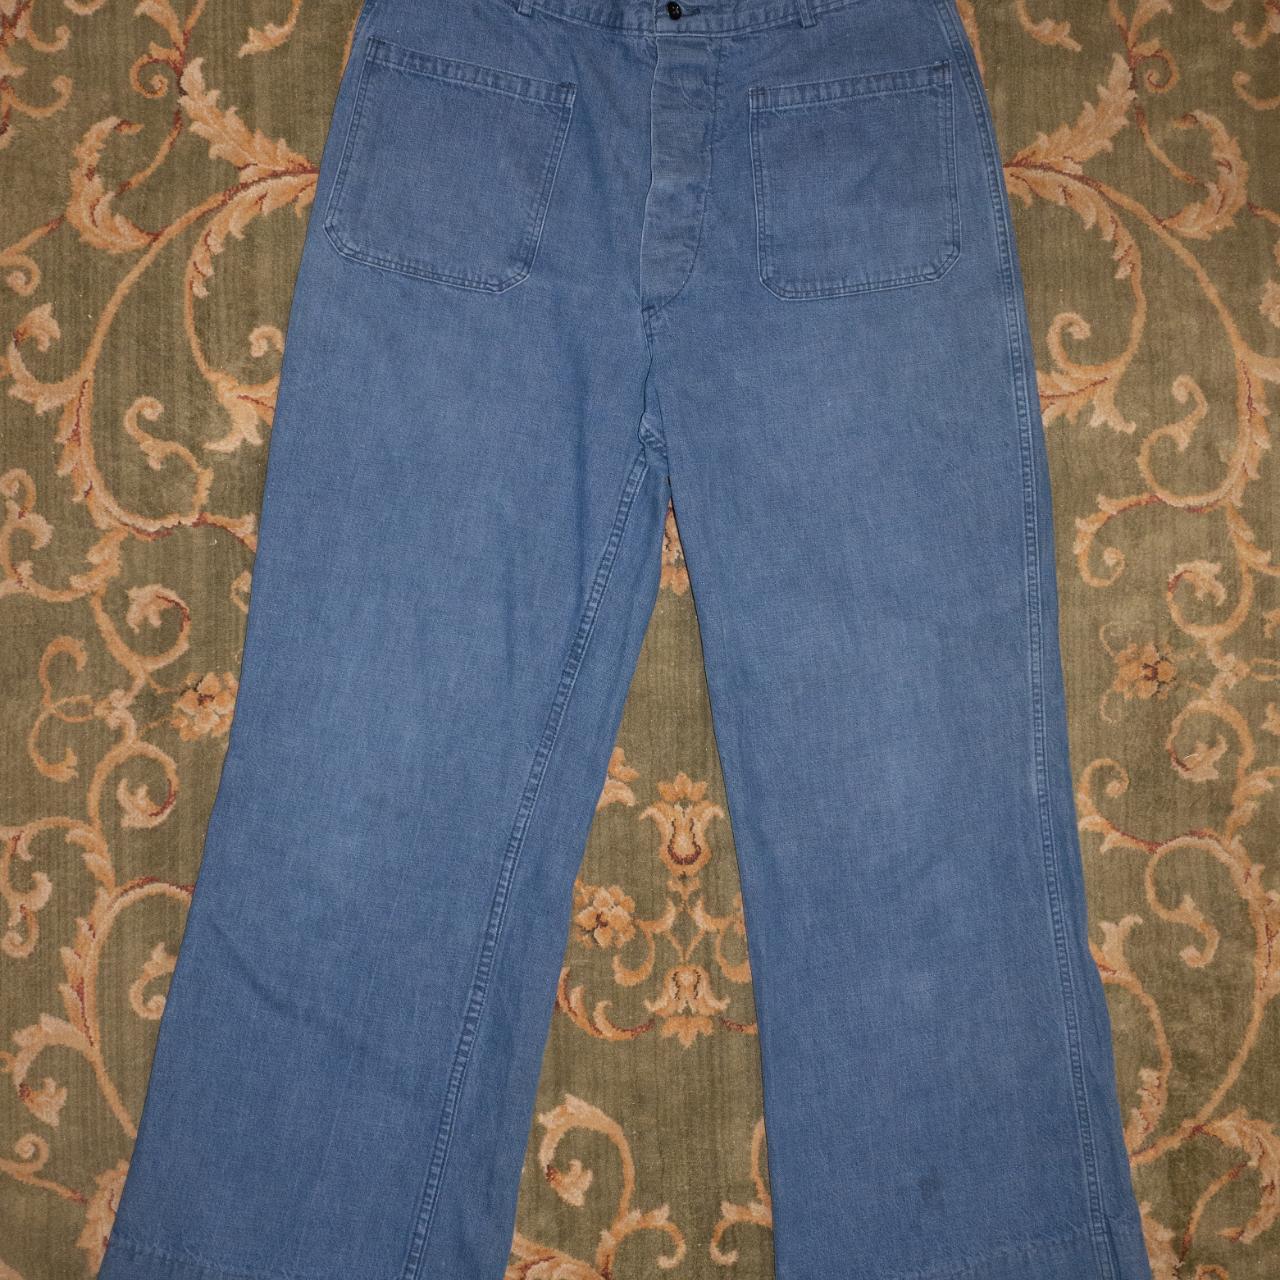 70s Bell Bottom Denim Jeans, Sea Farer Dungaree